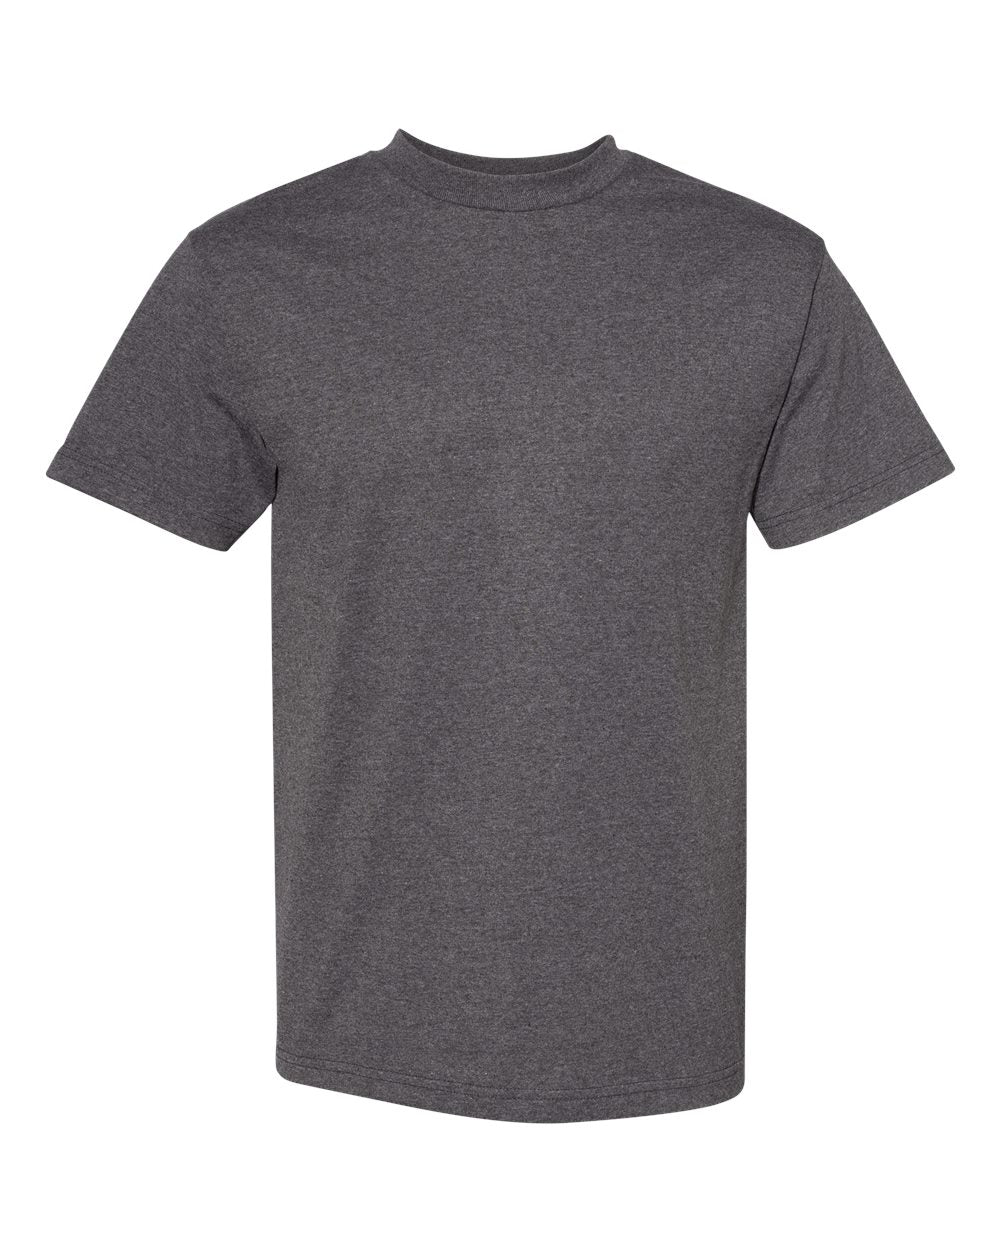 American Apparel Unisex Heavyweight Cotton T-Shirt